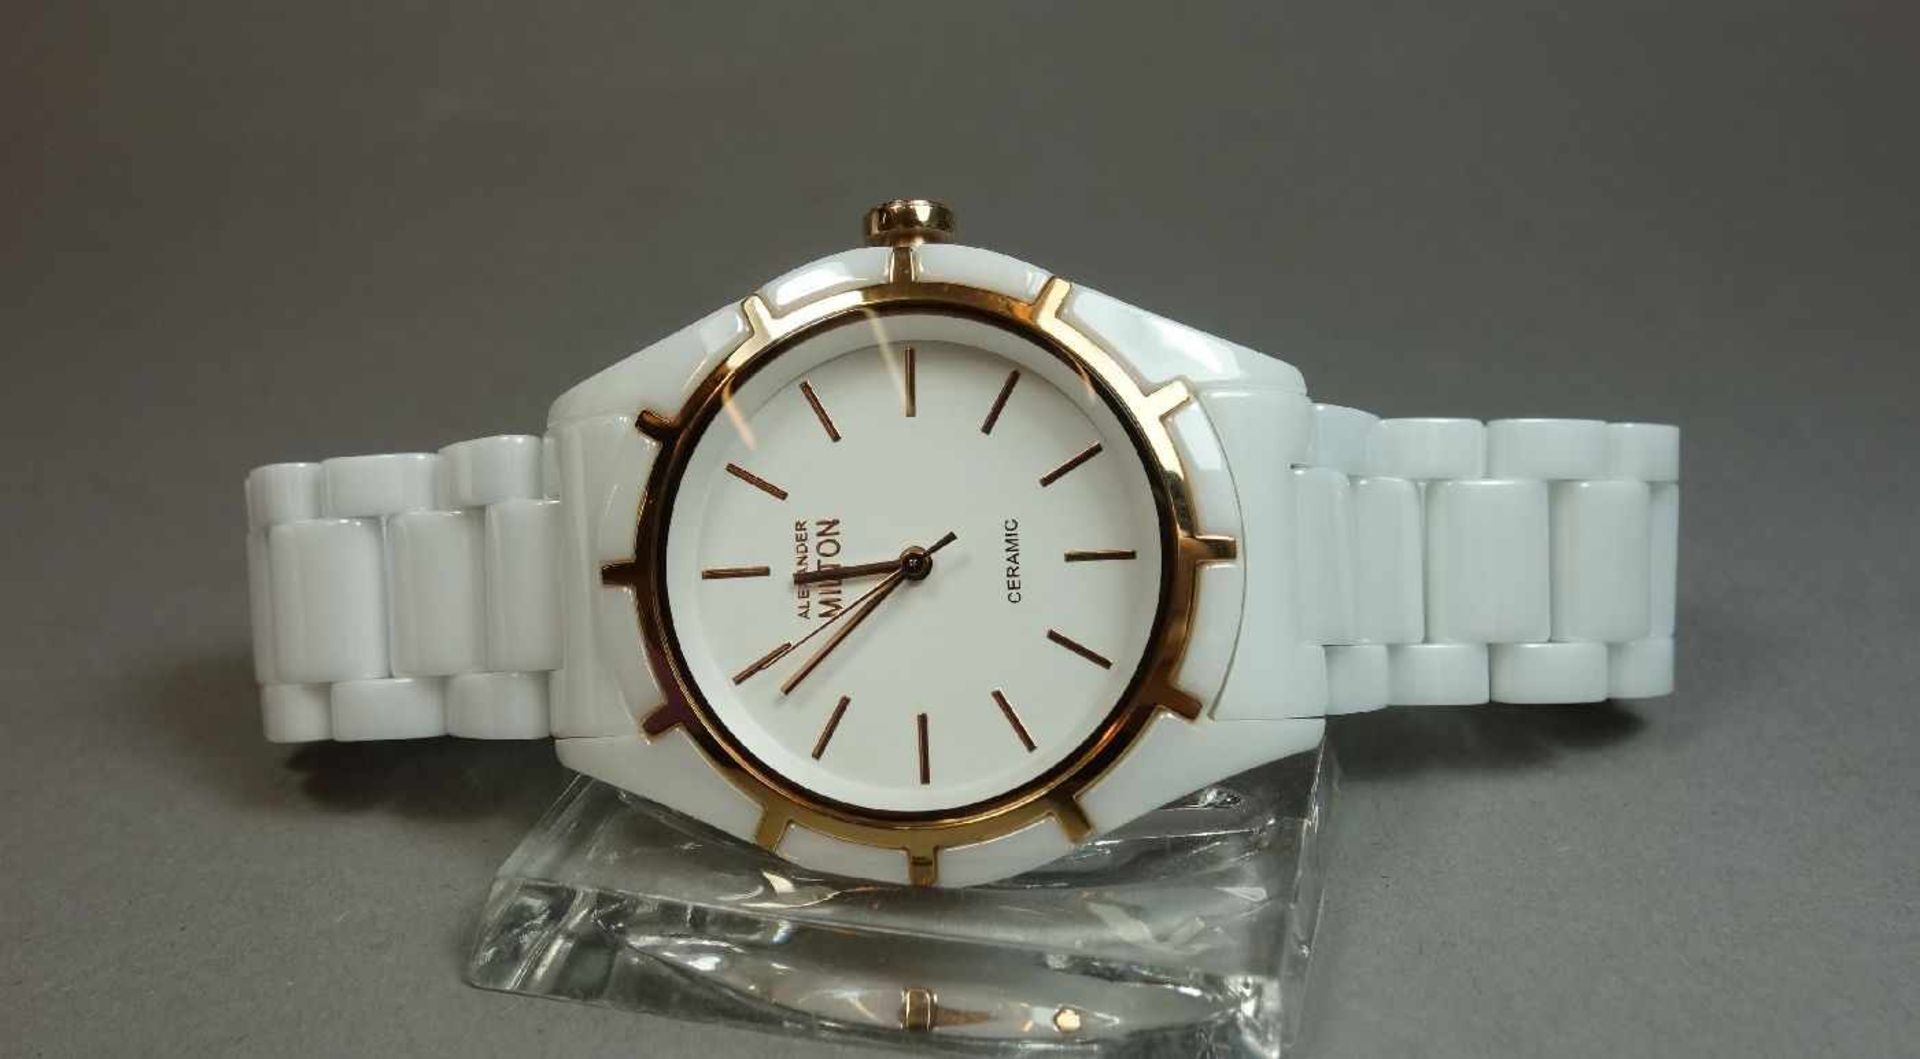 KERAMIK-ARMBANDUHR ALEXANDER MILTON / wristwatch, Quarz-Uhr, Manufaktur Alexander Milton /